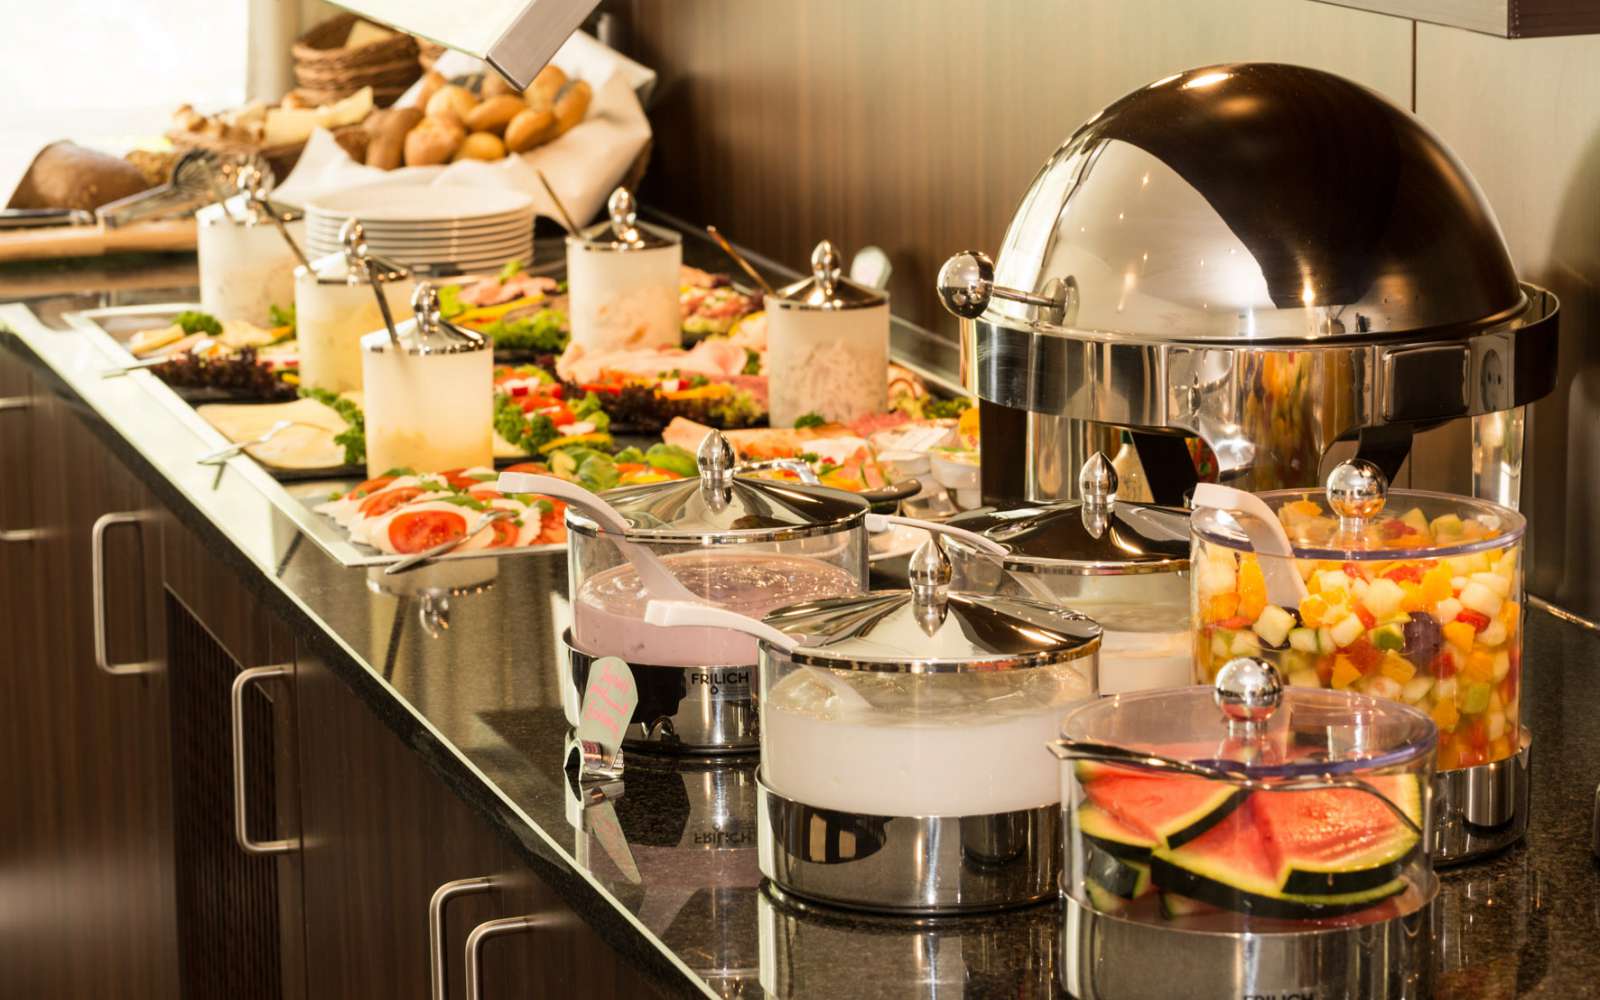 Üppige Auswahl im Frühstücksbuffet im Heikotel Hotel Windsor